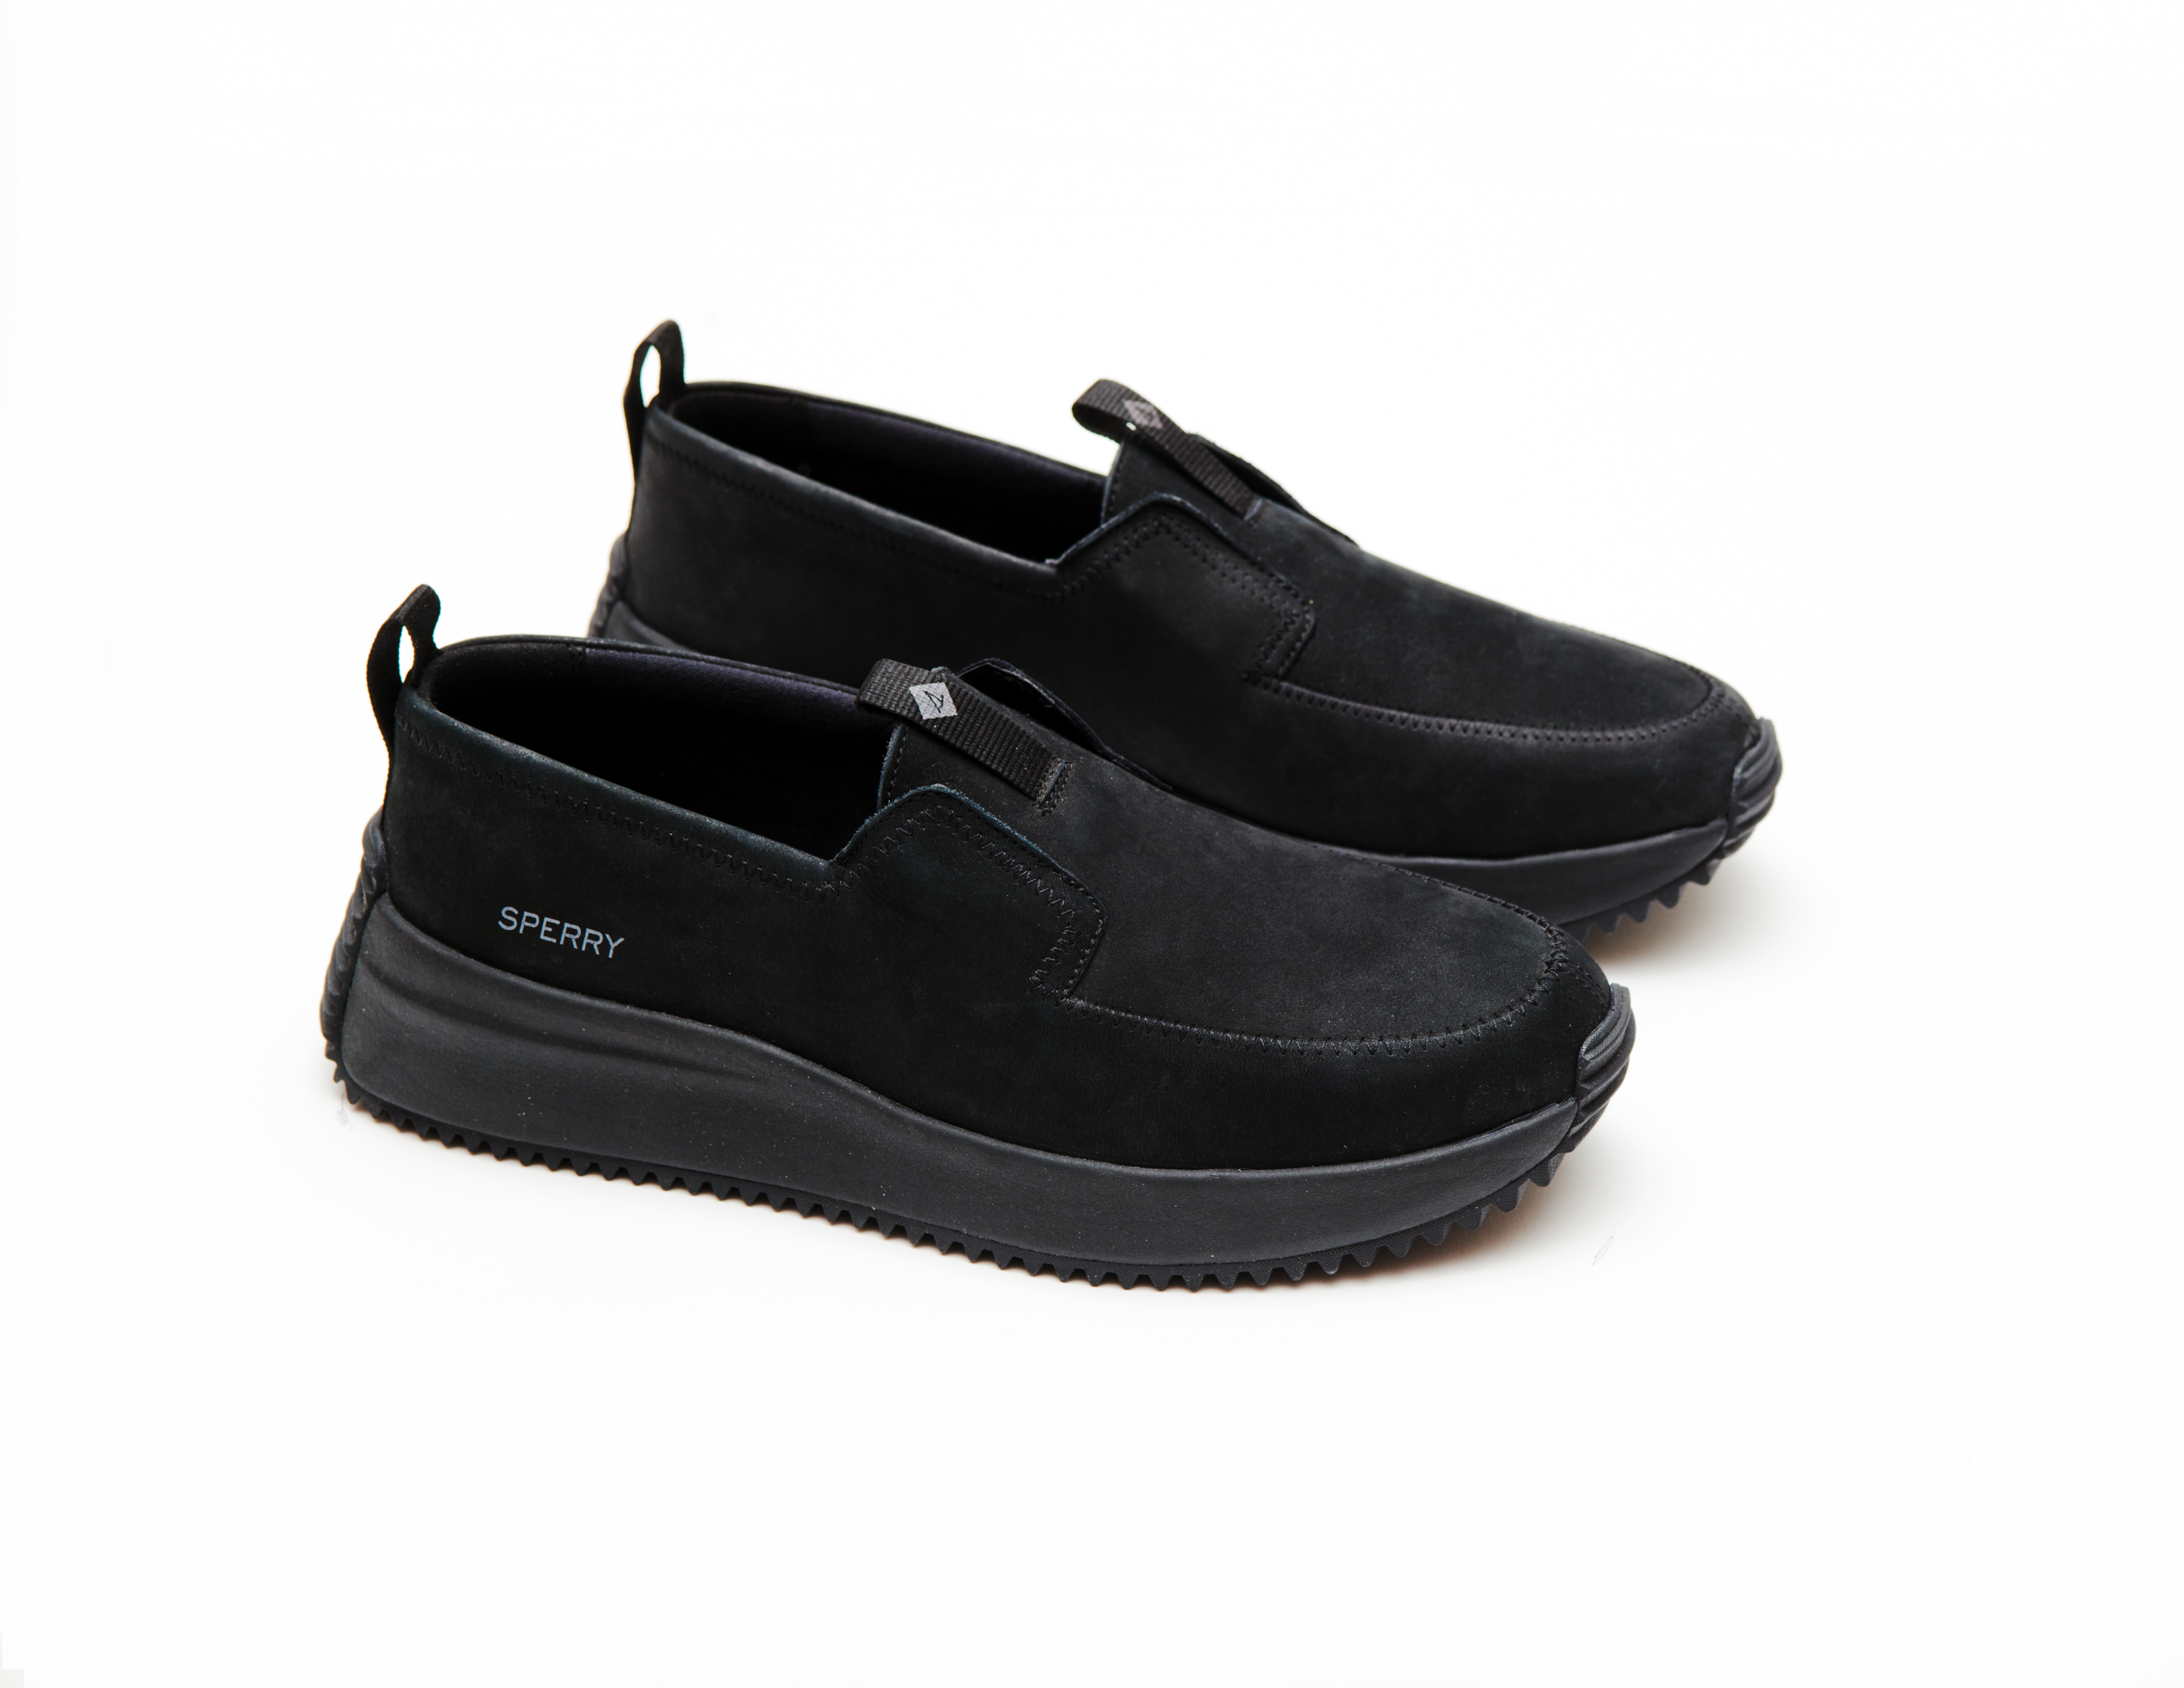 boatrunner black pair